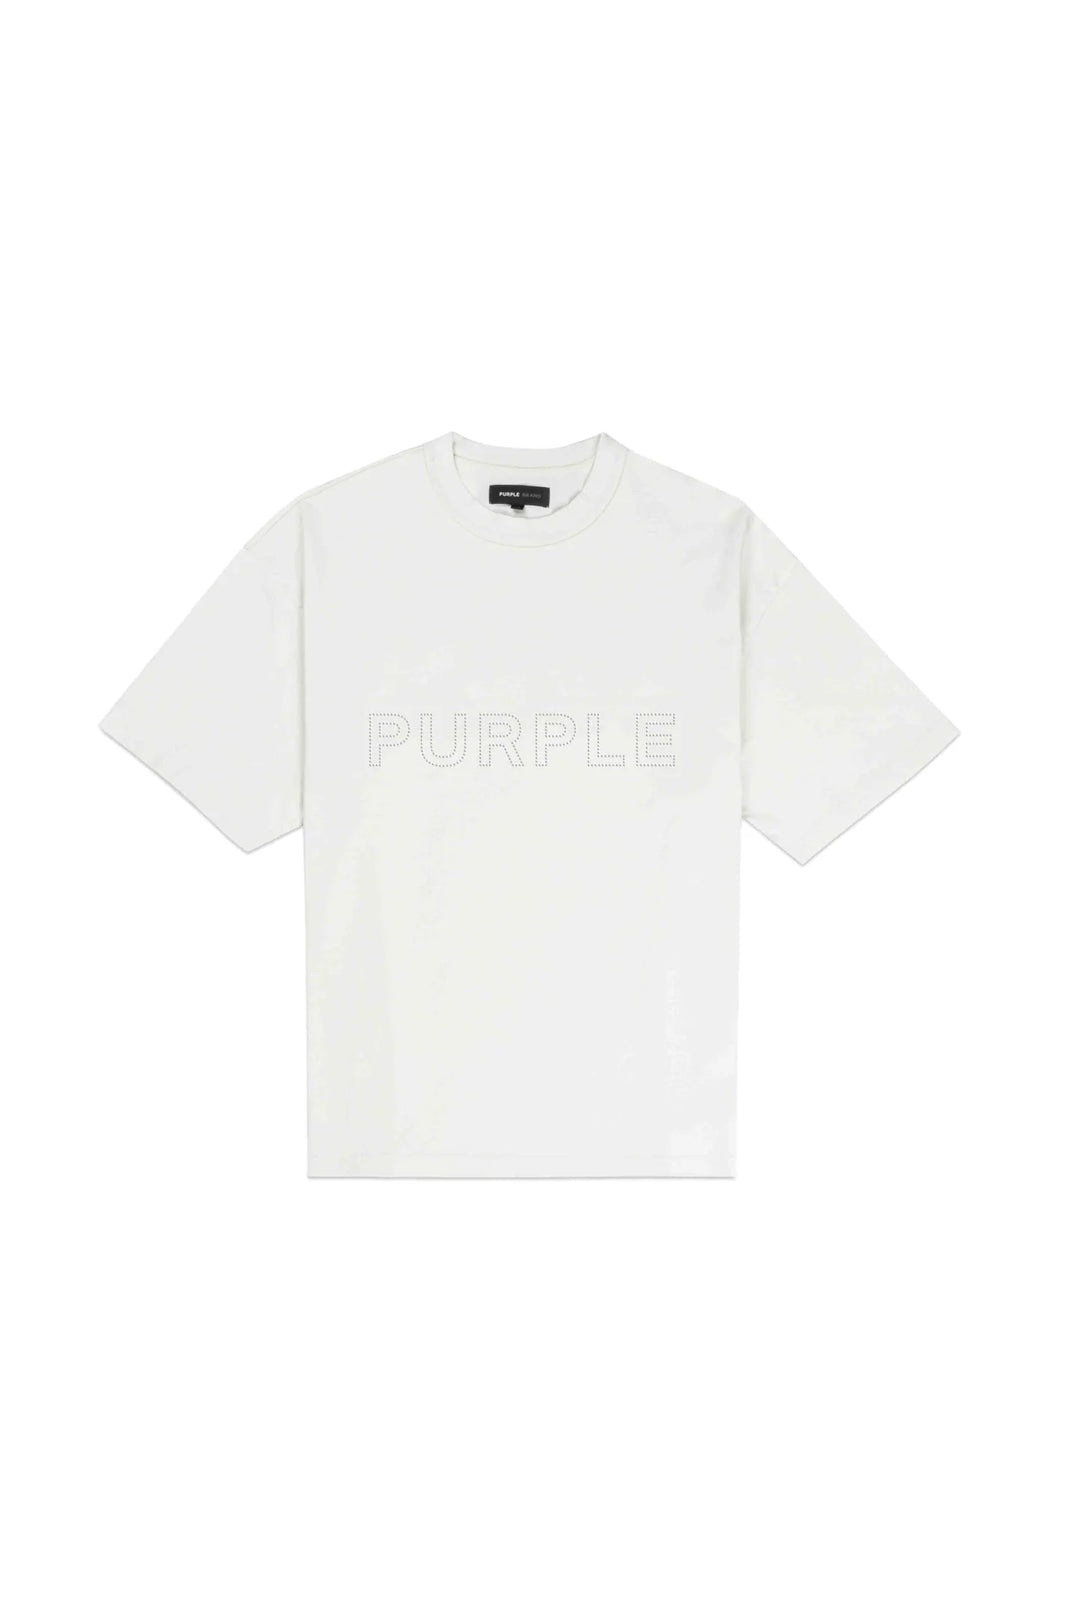 Purple Brand P123 Off White MMCM224 Crystals T-Shirt - Off White